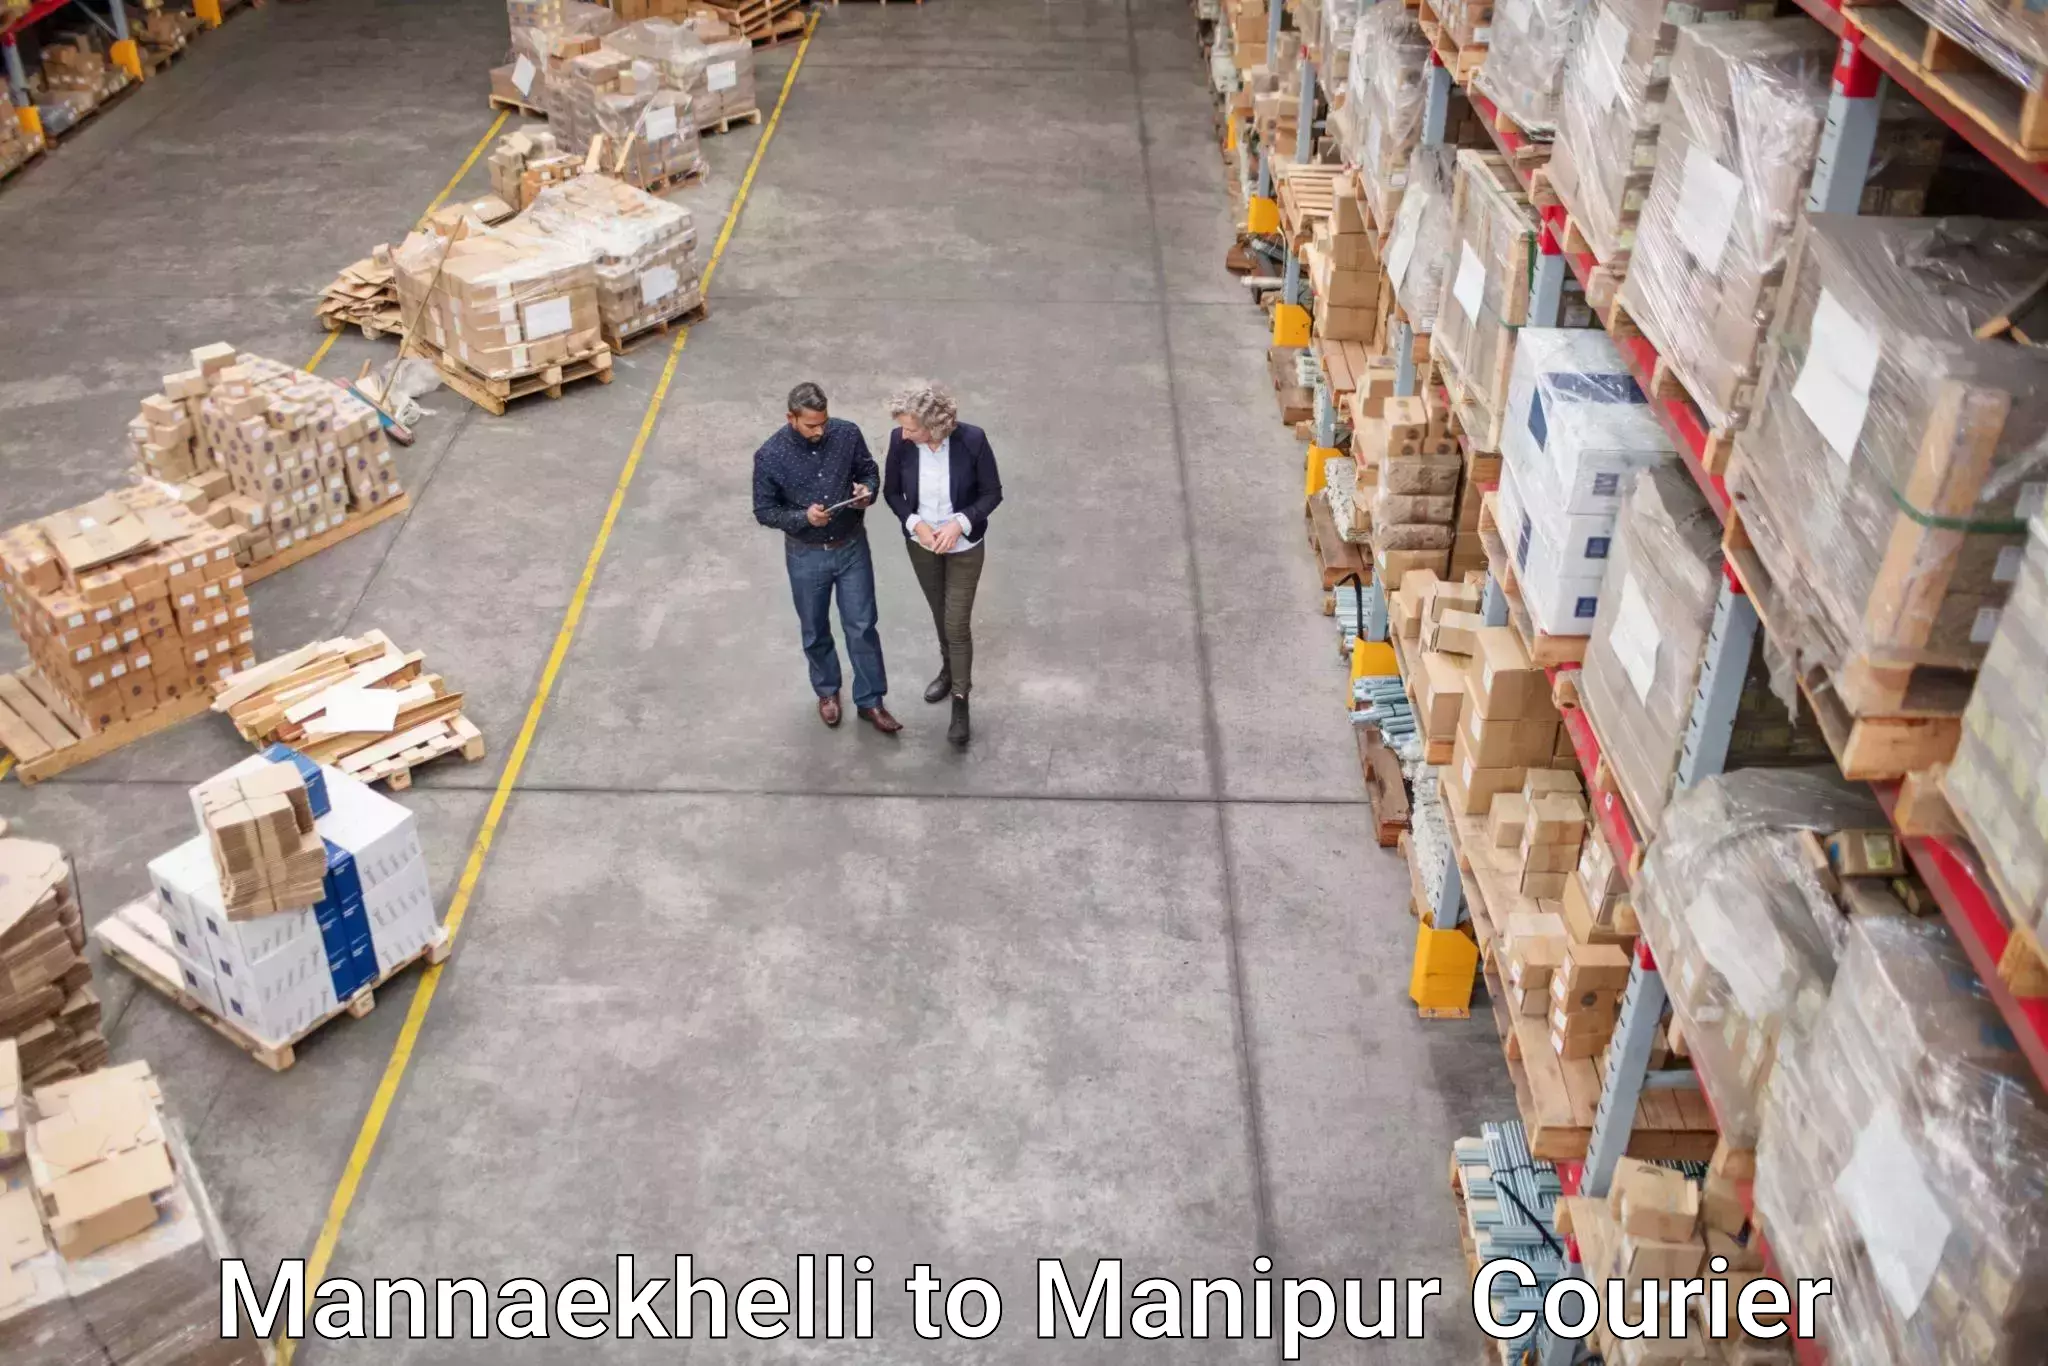 Express delivery capabilities Mannaekhelli to Senapati